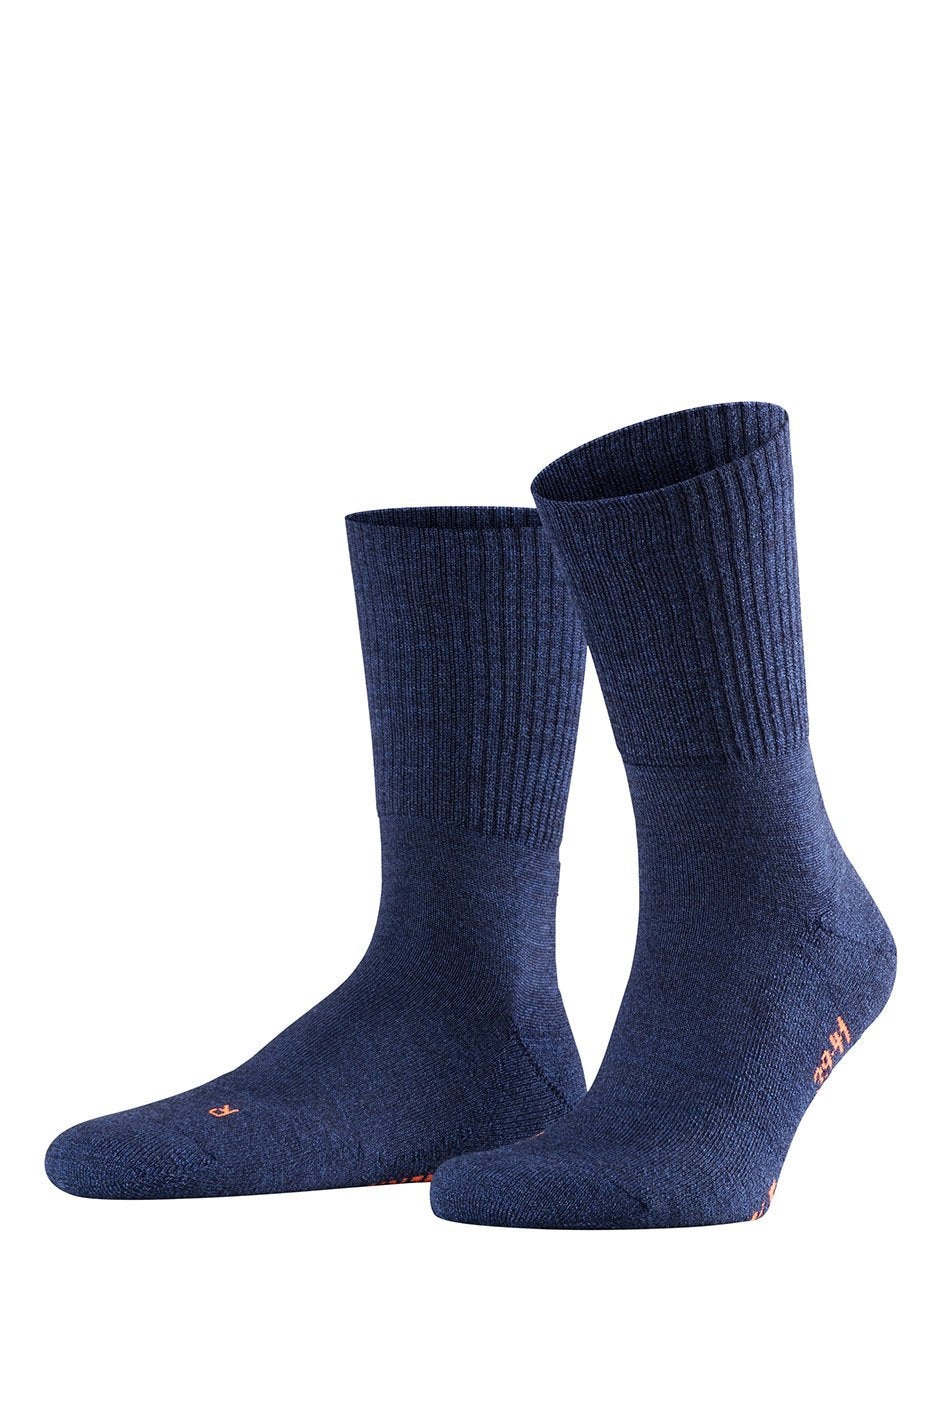 Falke Walkie Light Men's Socks